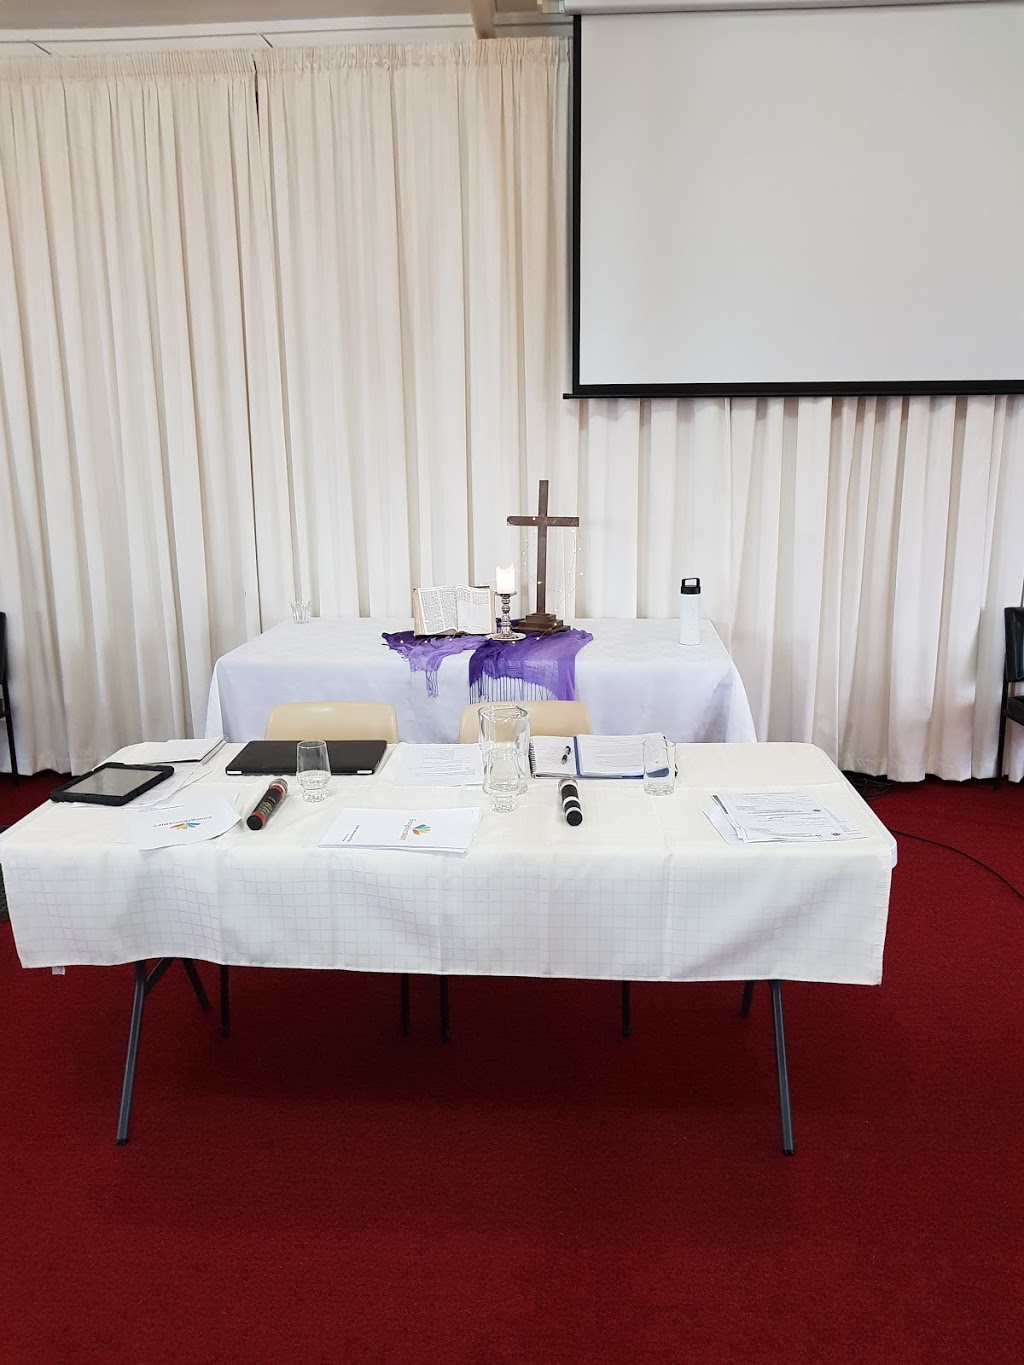 Uniting Church, NARRABRI, NSW | church | 46 Balonne St, Narrabri NSW 2390, Australia